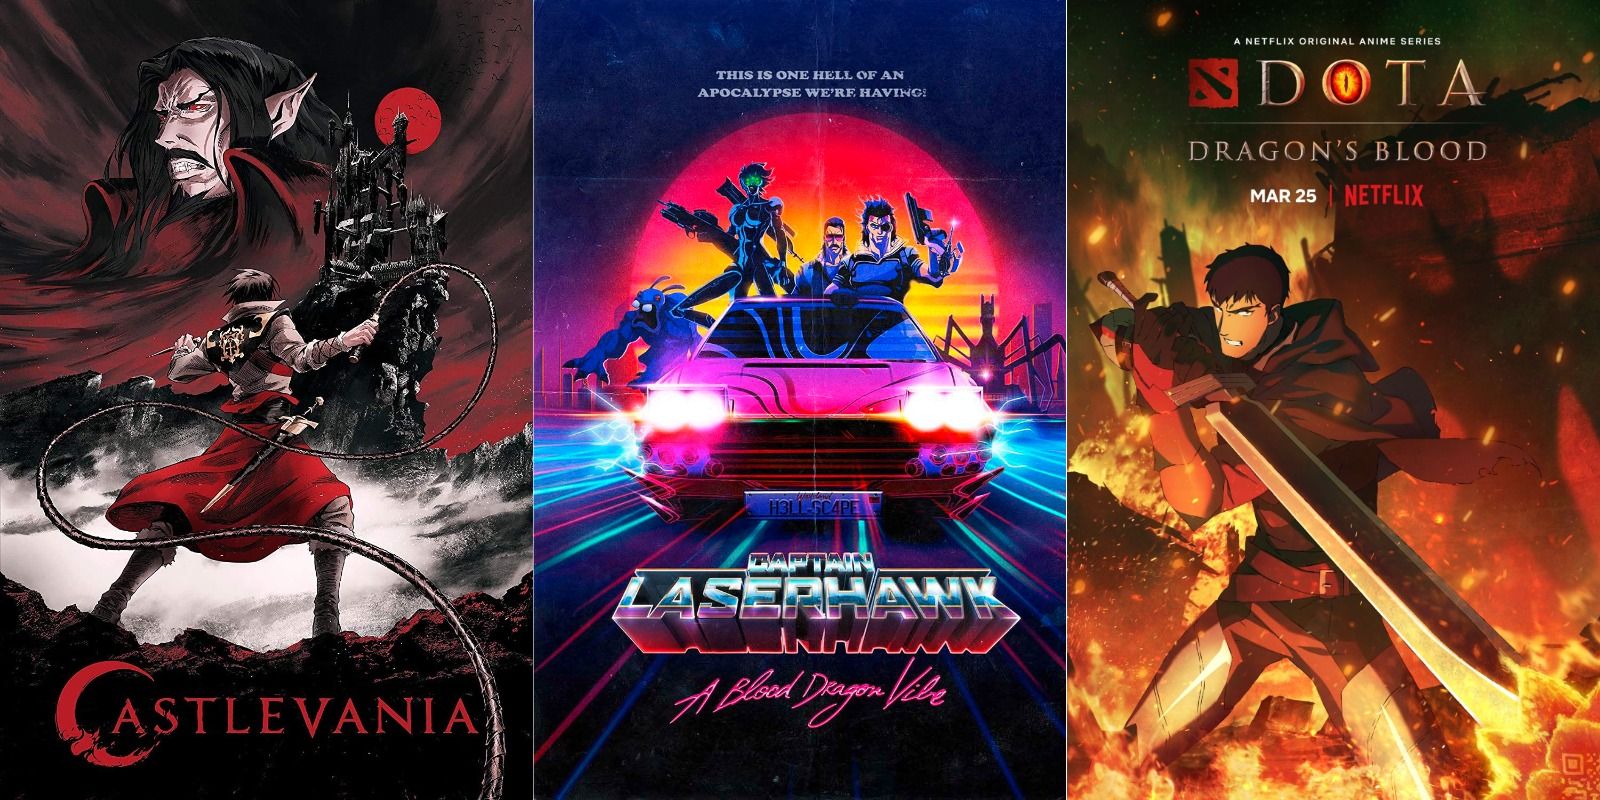 Netflix's Castlevania, upcoming Captain Laserhawk, and DOTA series